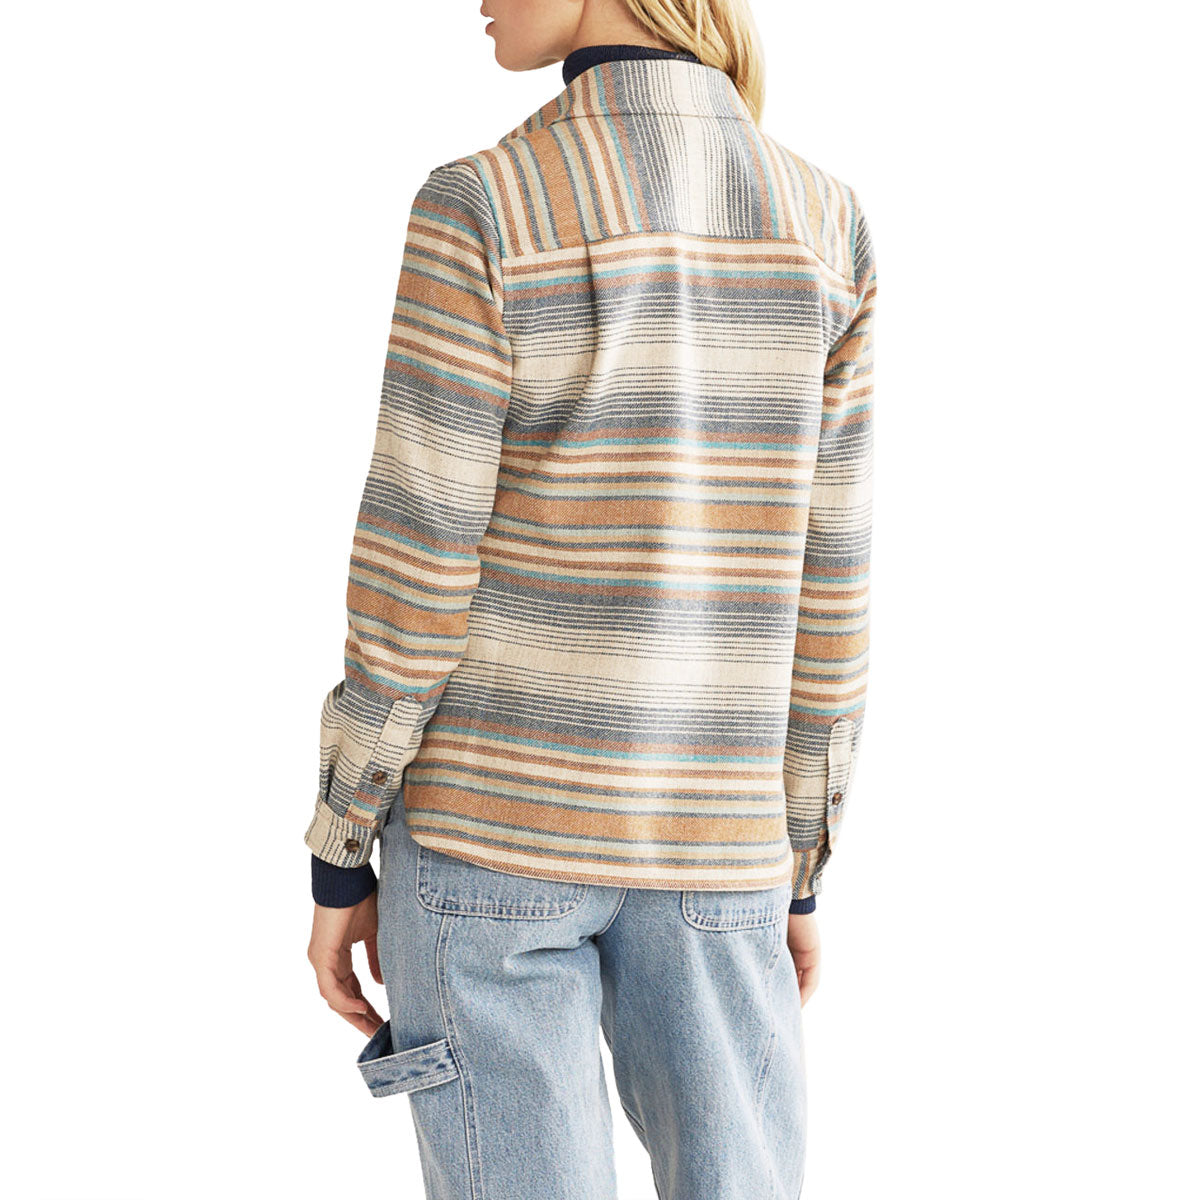 Pendleton Womens Long Sleeve Board Shirt - Tan Multi Stripe image 2